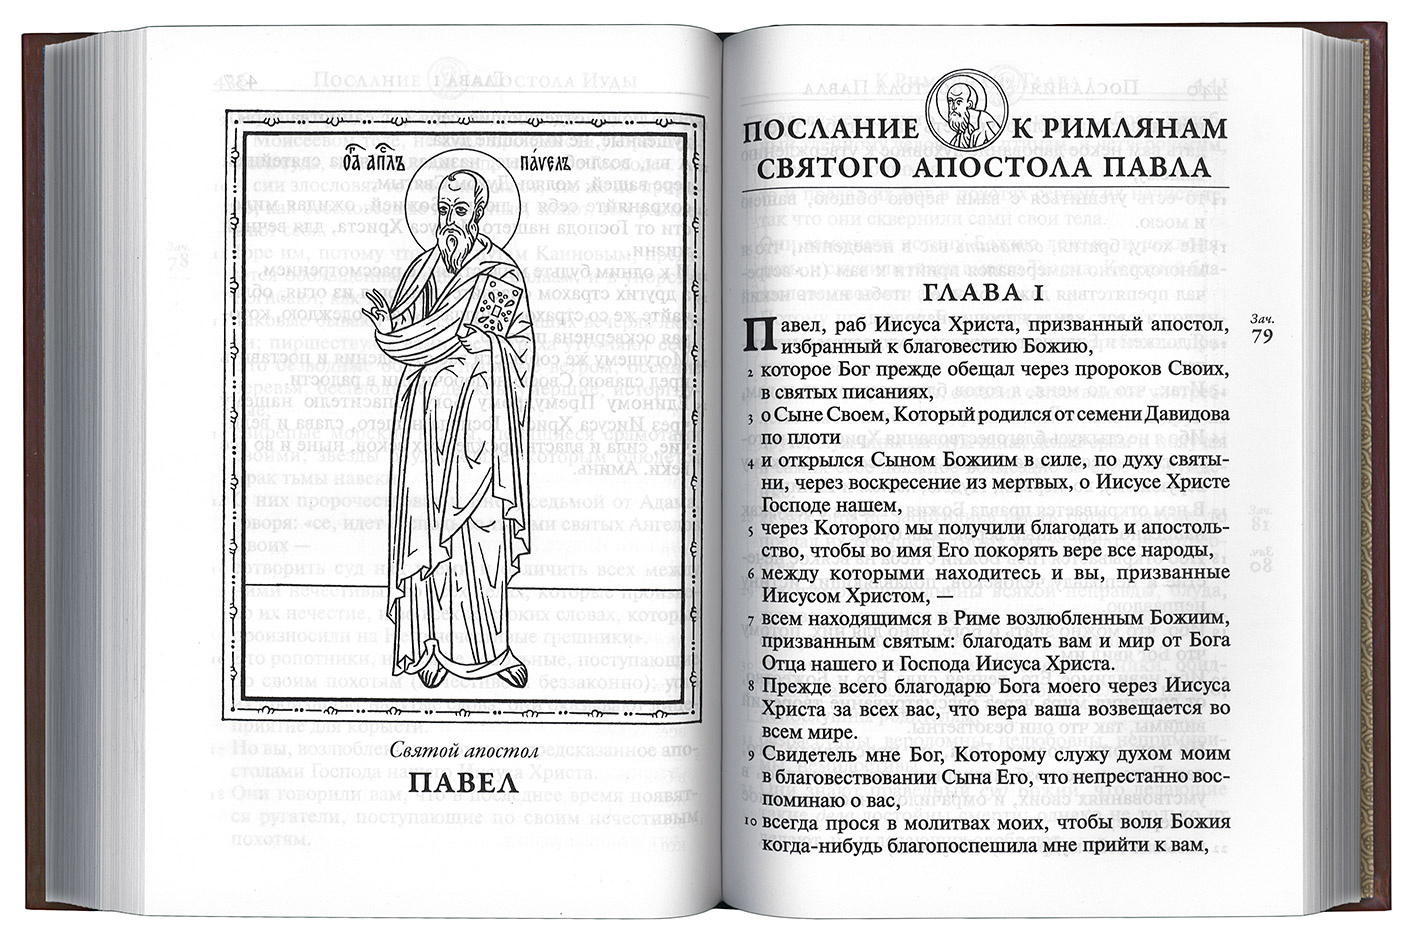 Новый Завет на русском языке. Крупный шрифт